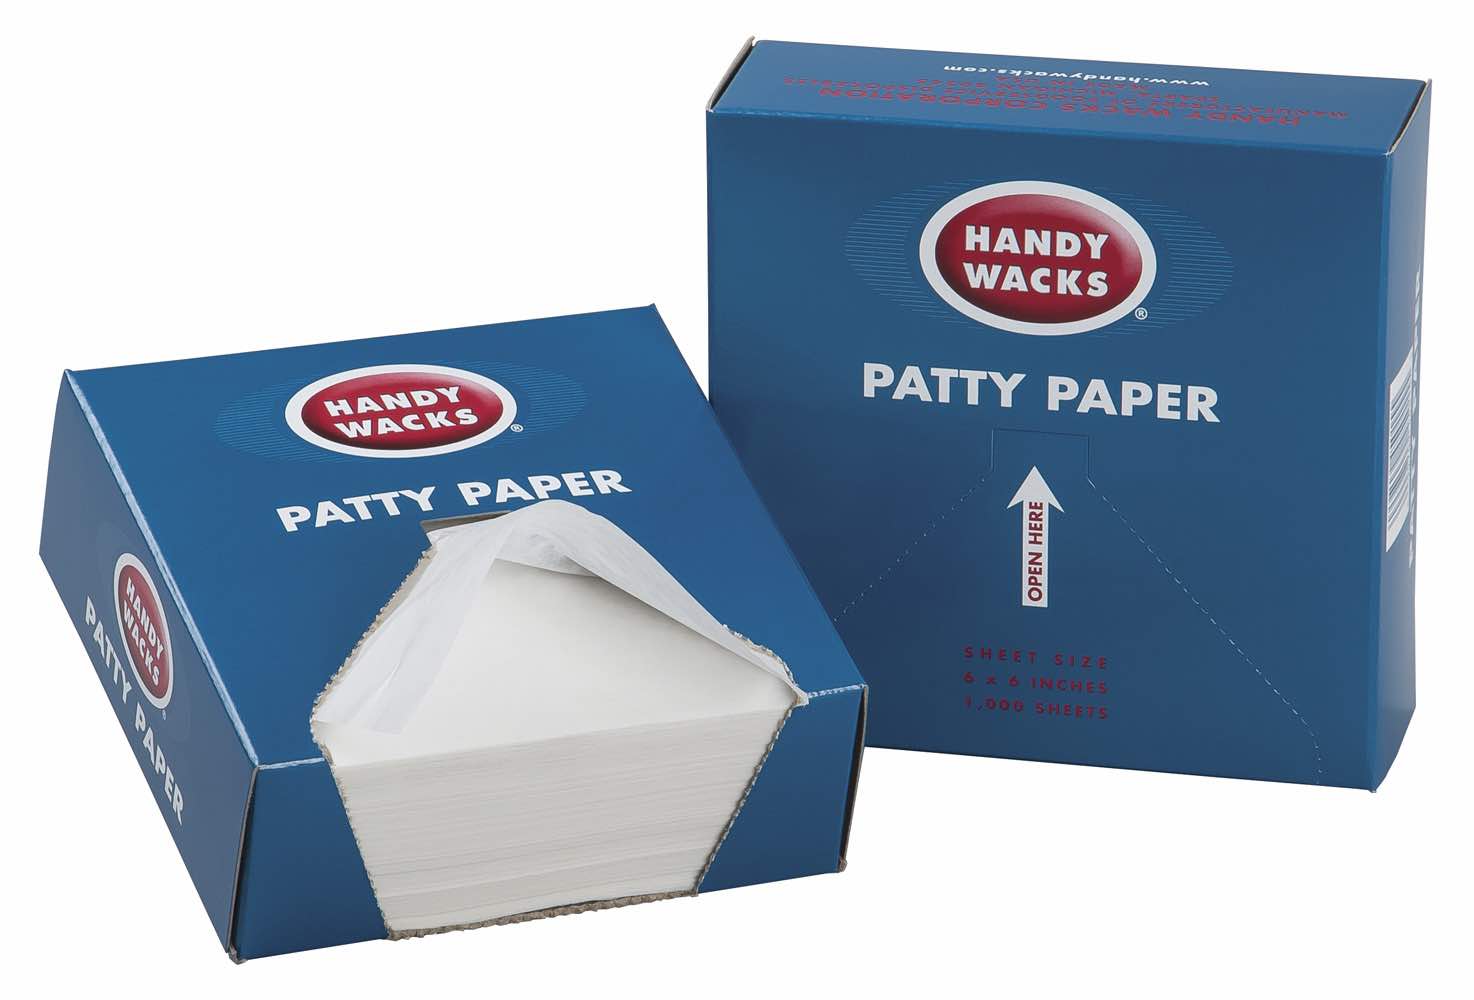 patty paper